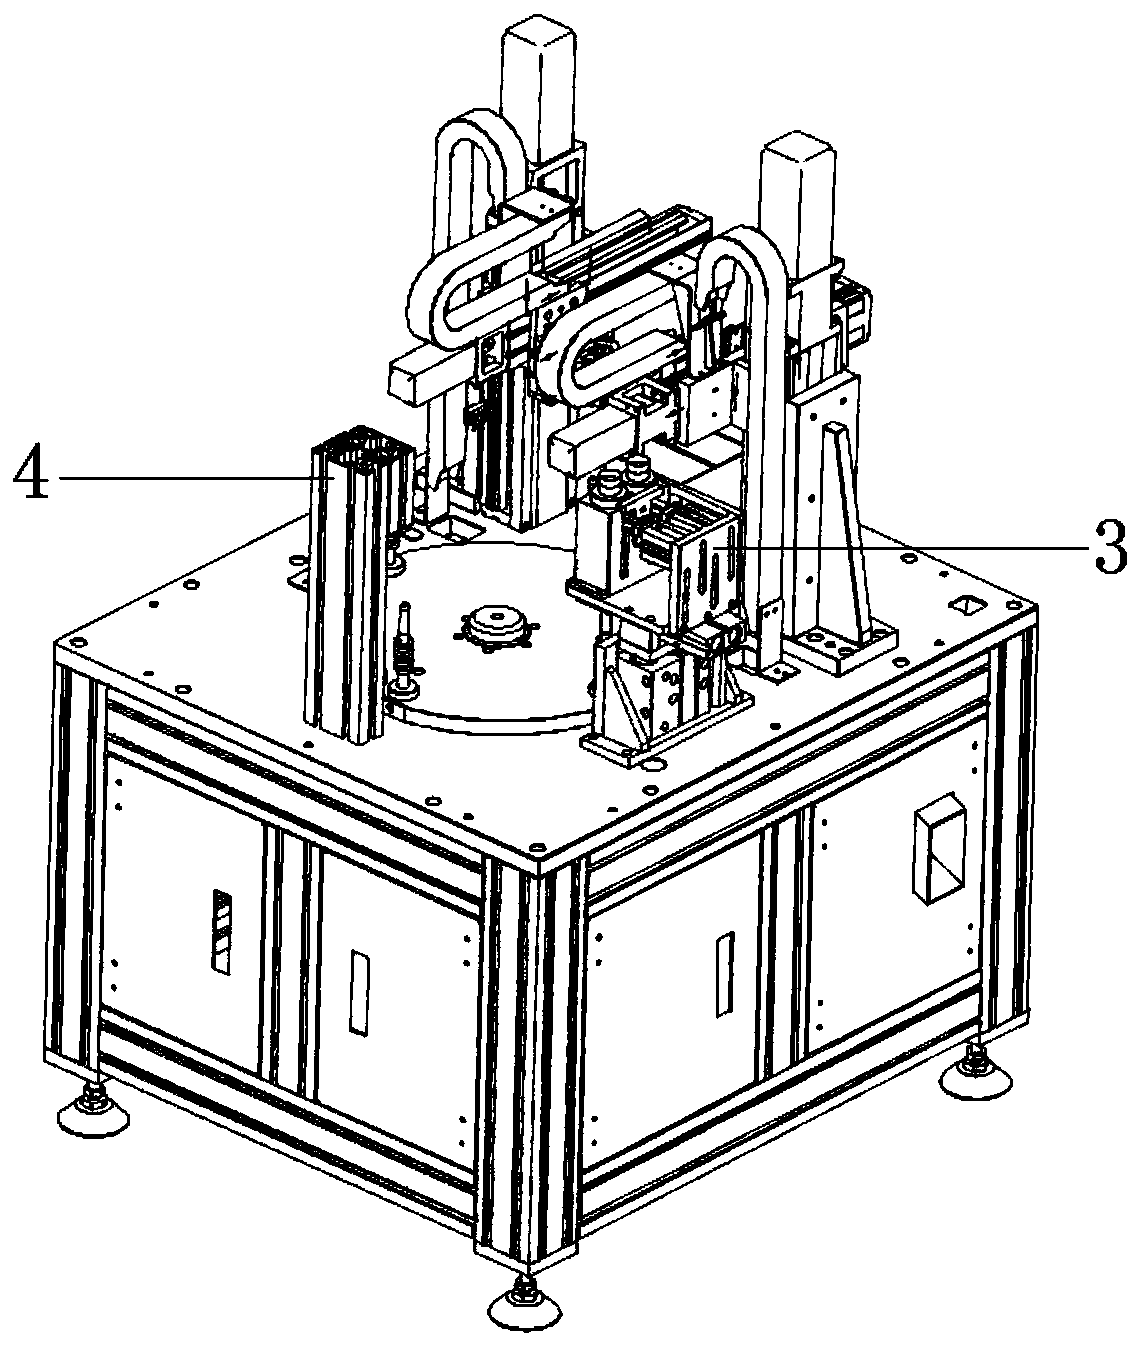 Full-automatic inner diameter sorting machine for springs